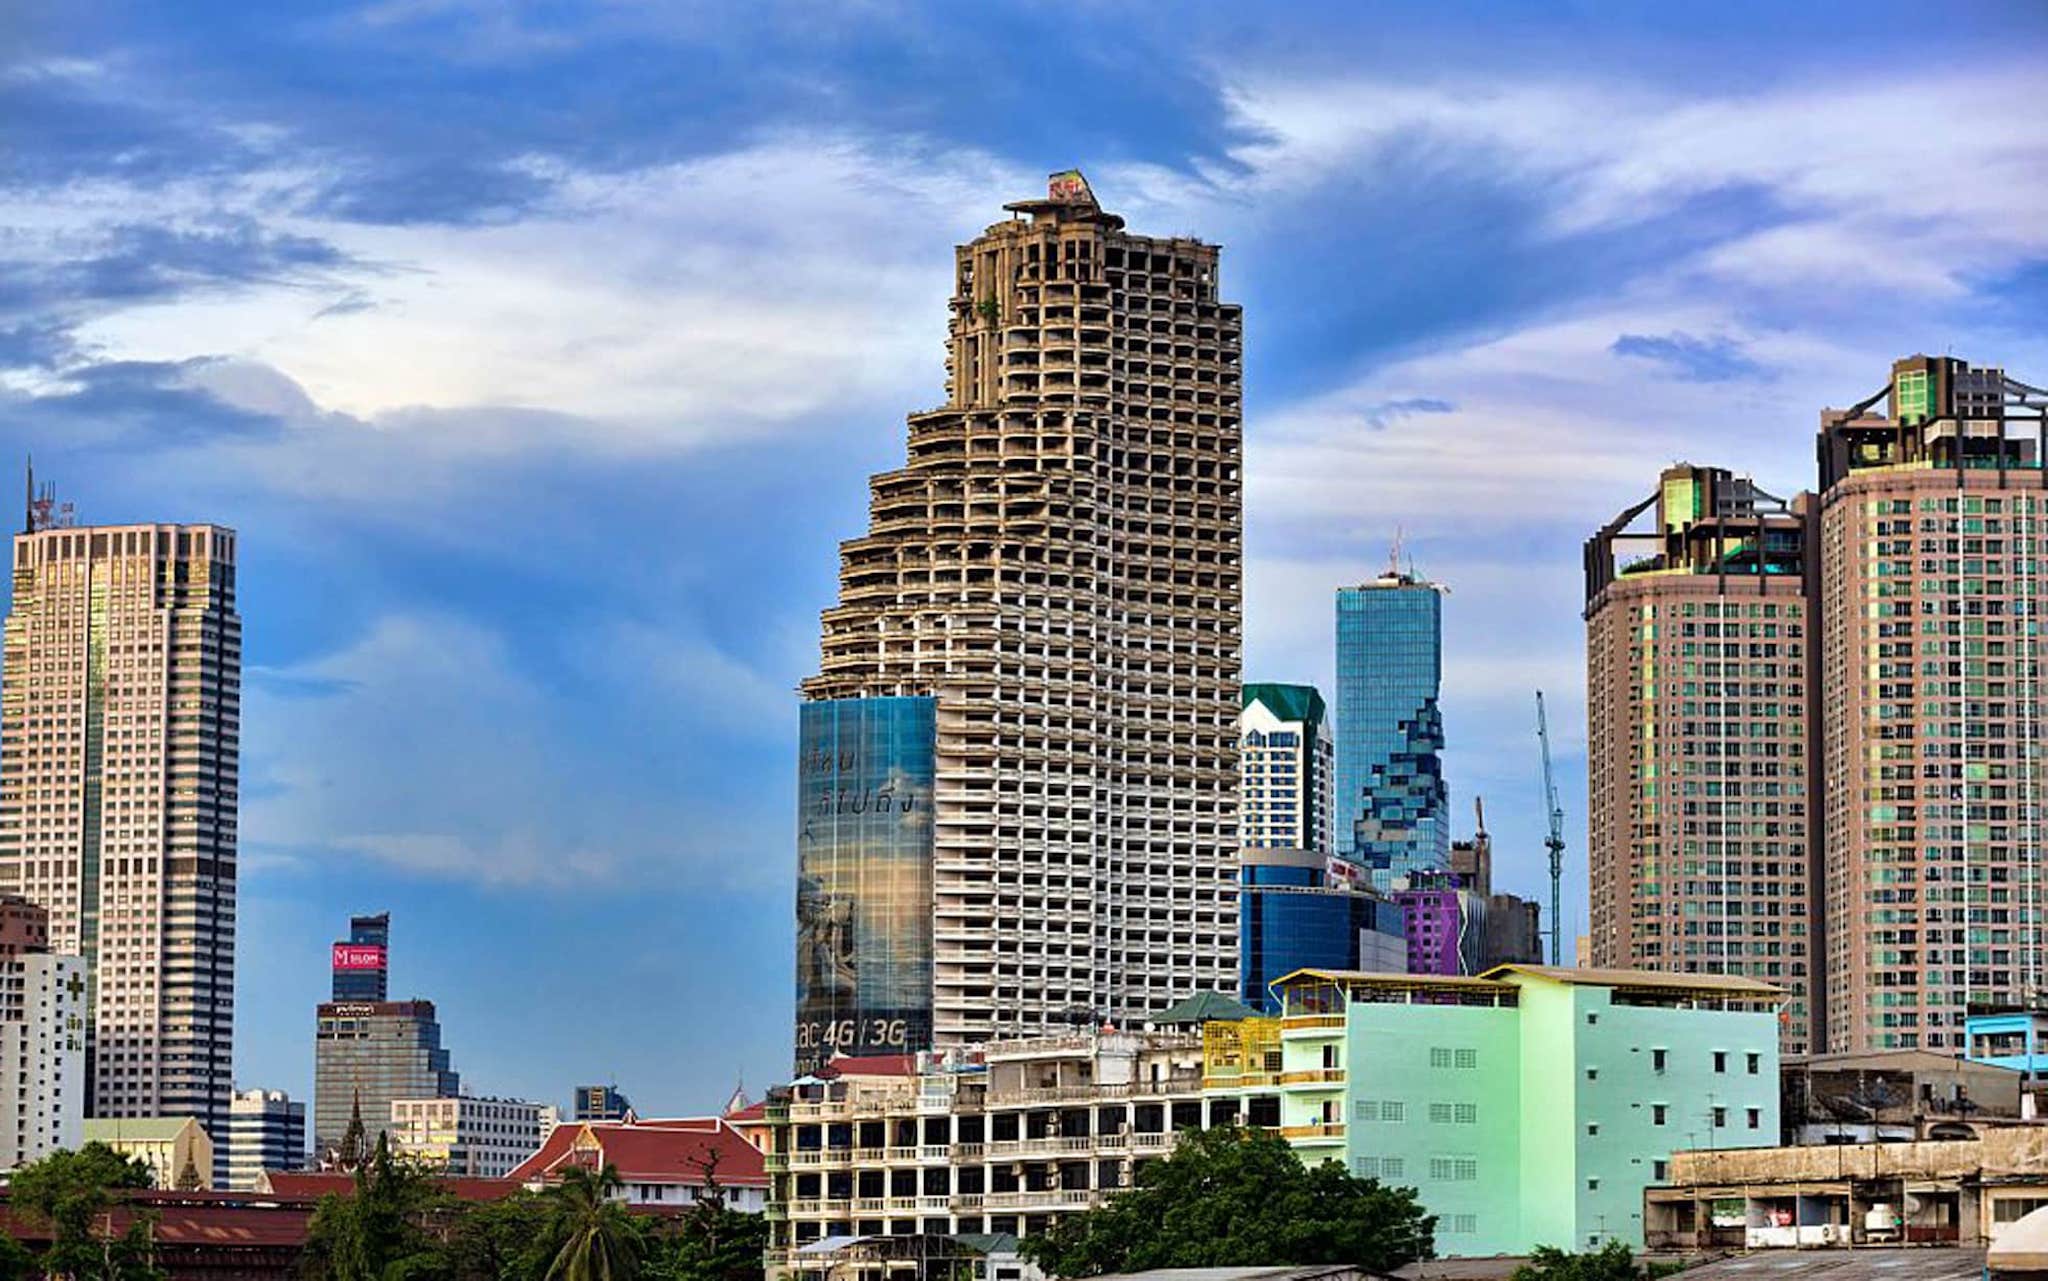 Unique tower. Небоскреб Sathorn unique Tower. Бангкок башня Саторна. Саторн Юник Тауэр. Небоскребы Бангкока.